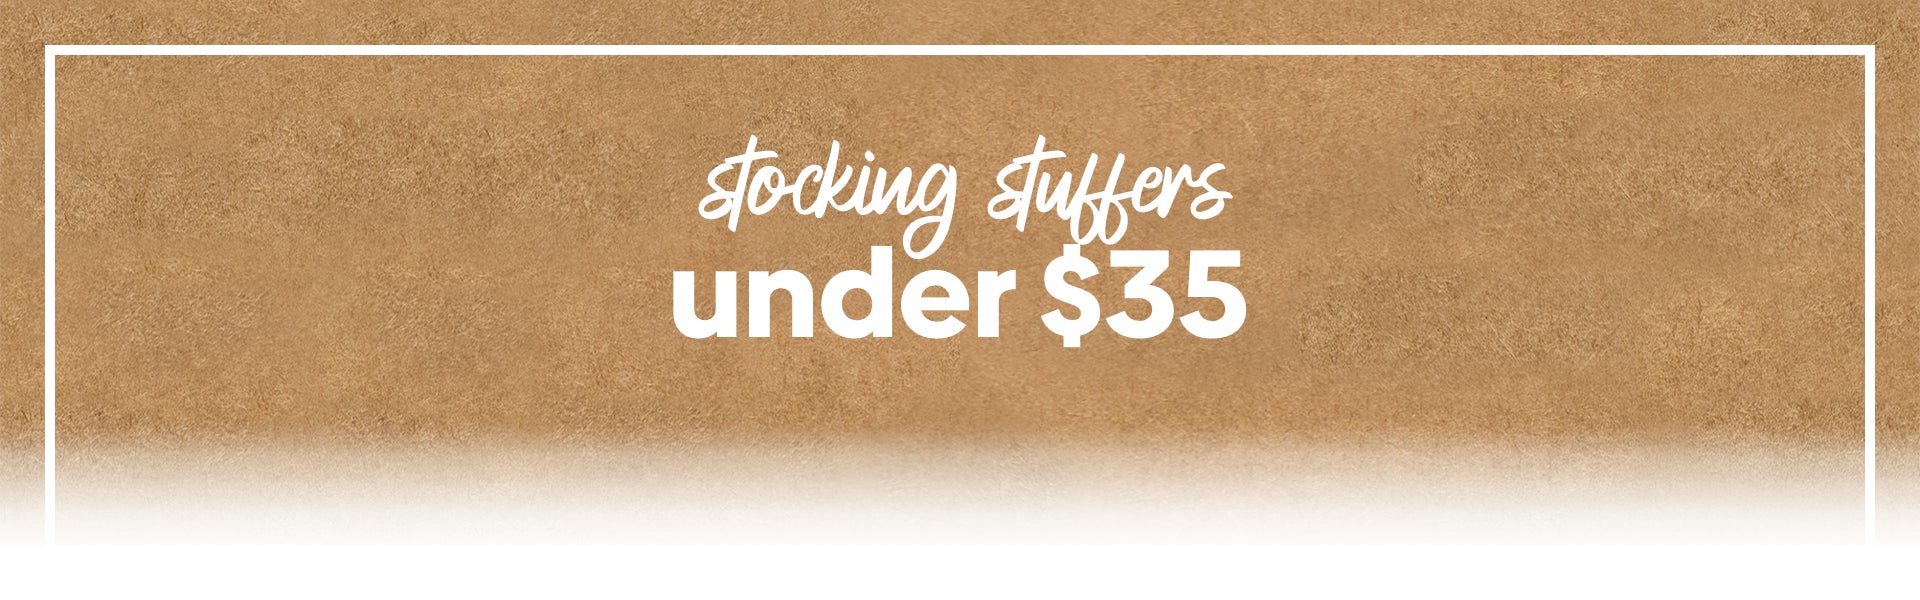 stocking stuffers under $35